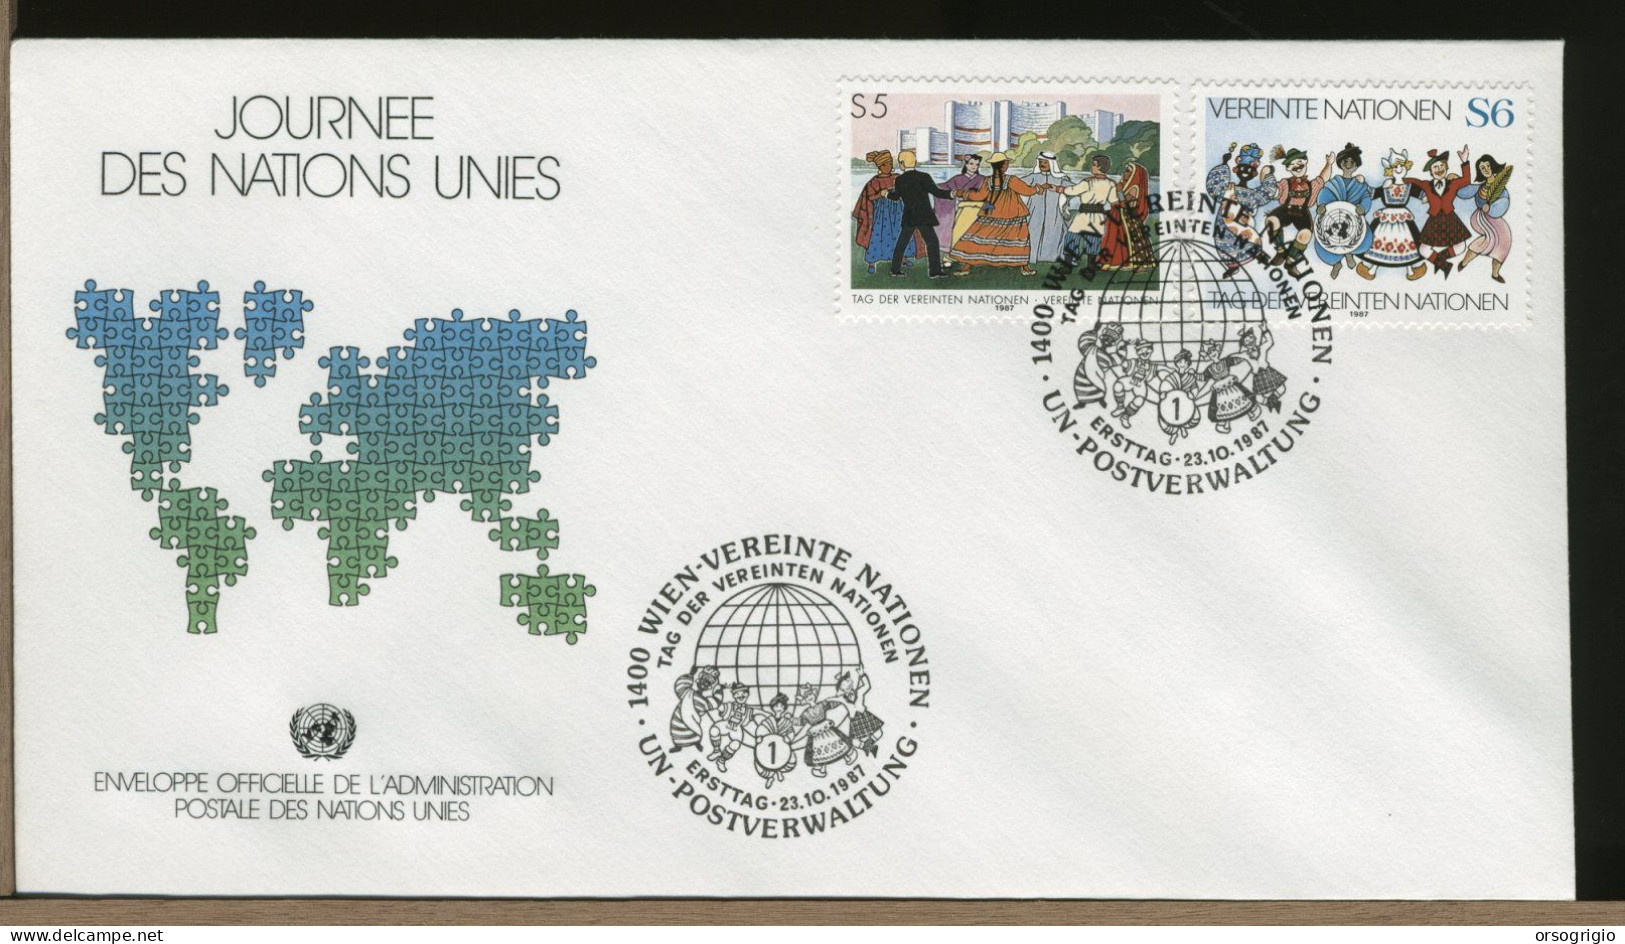 ONU - UNITED NATIONS - FDC 1987 - Emissions Communes New York/Genève/Vienne